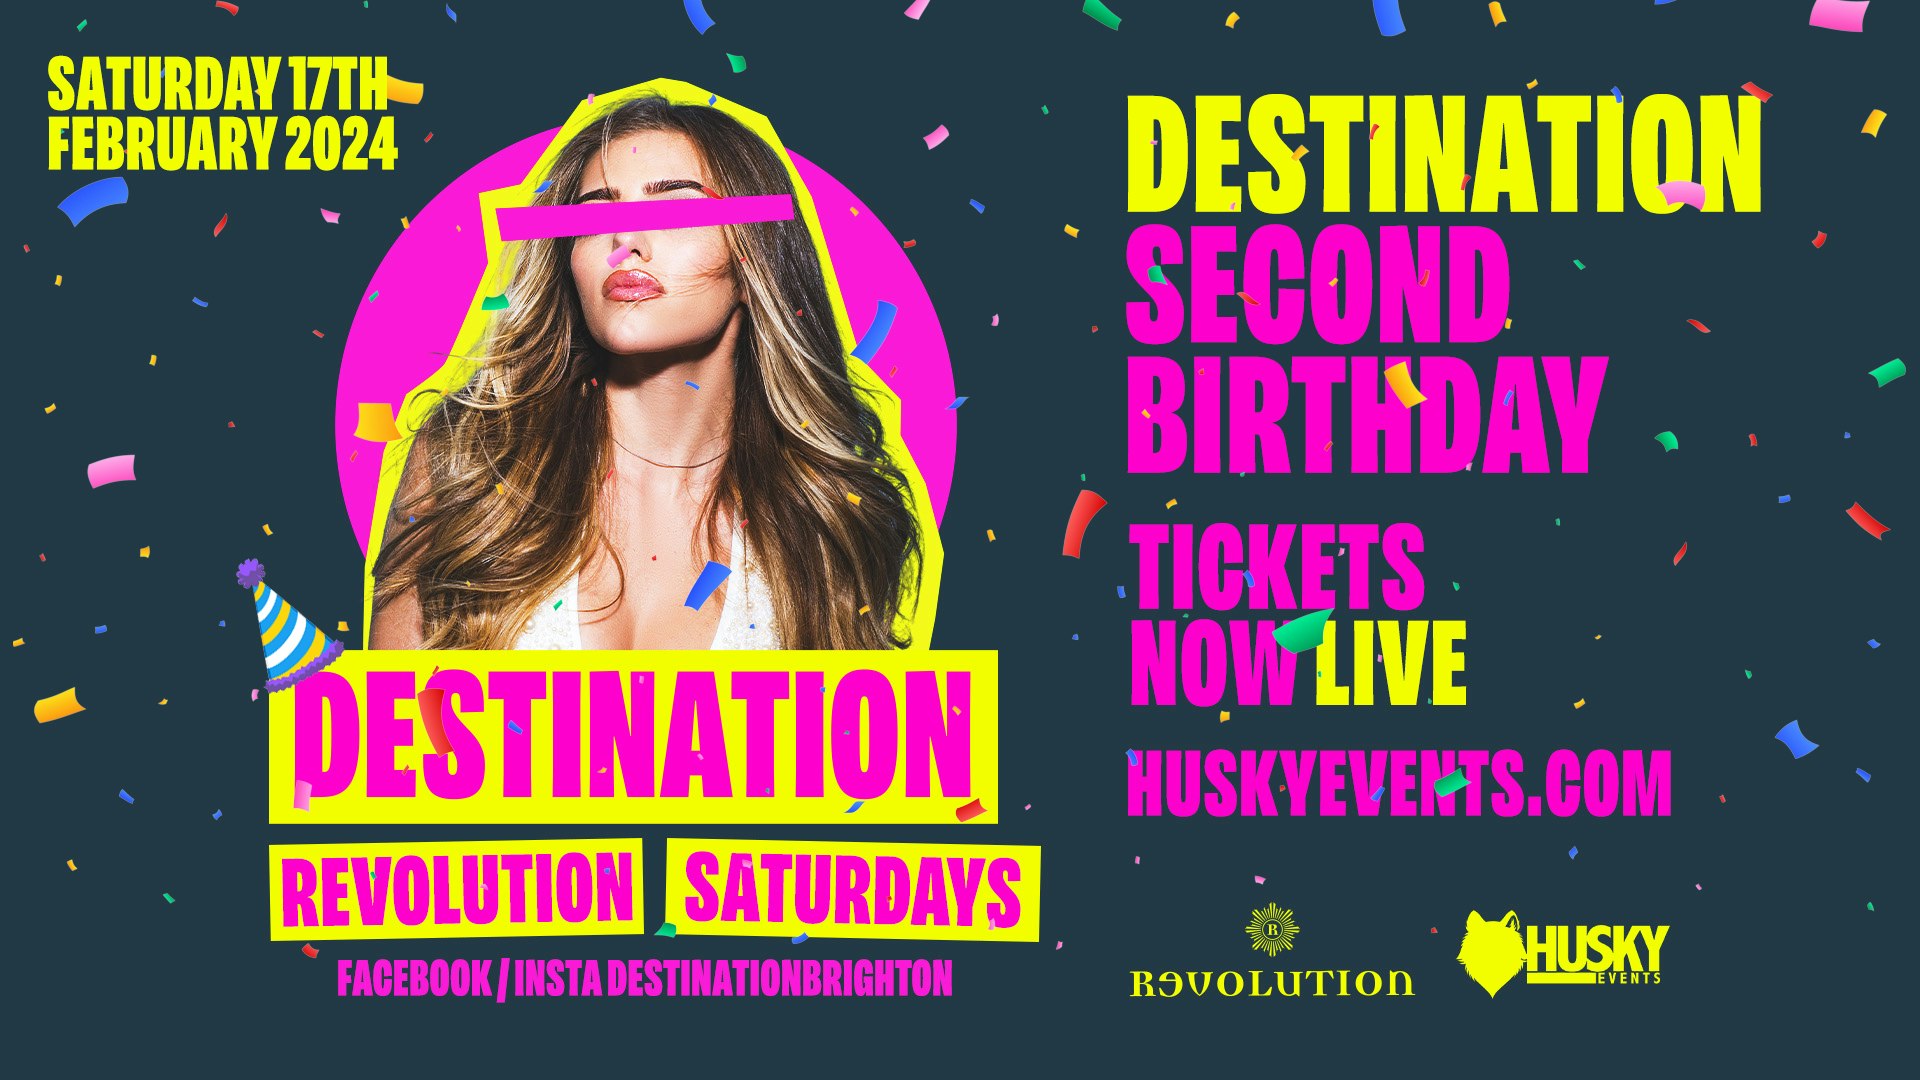 Destination Saturdays x Revolution Brighton ➤ Destination’s Second Birthday ➤ 17.02.2024